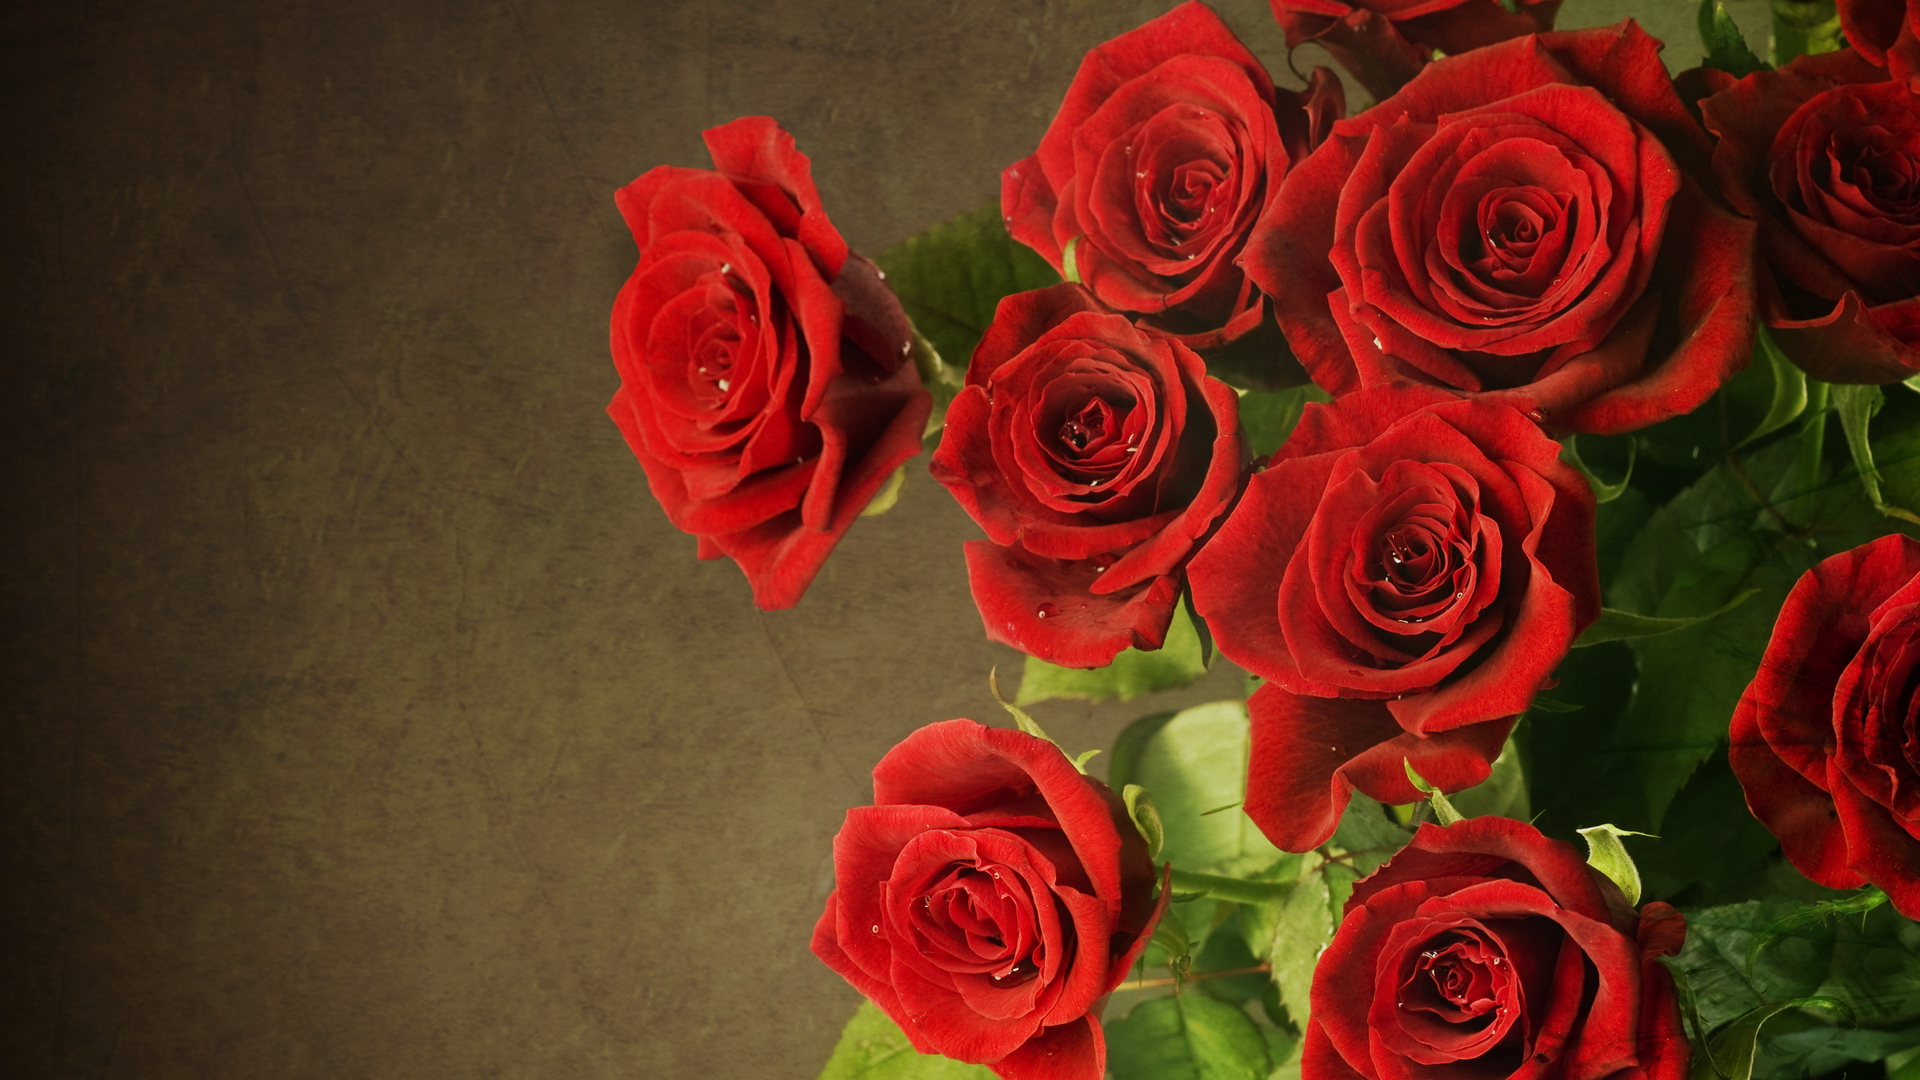 Red Roses Wallpaper 3d For Desktop Pictures